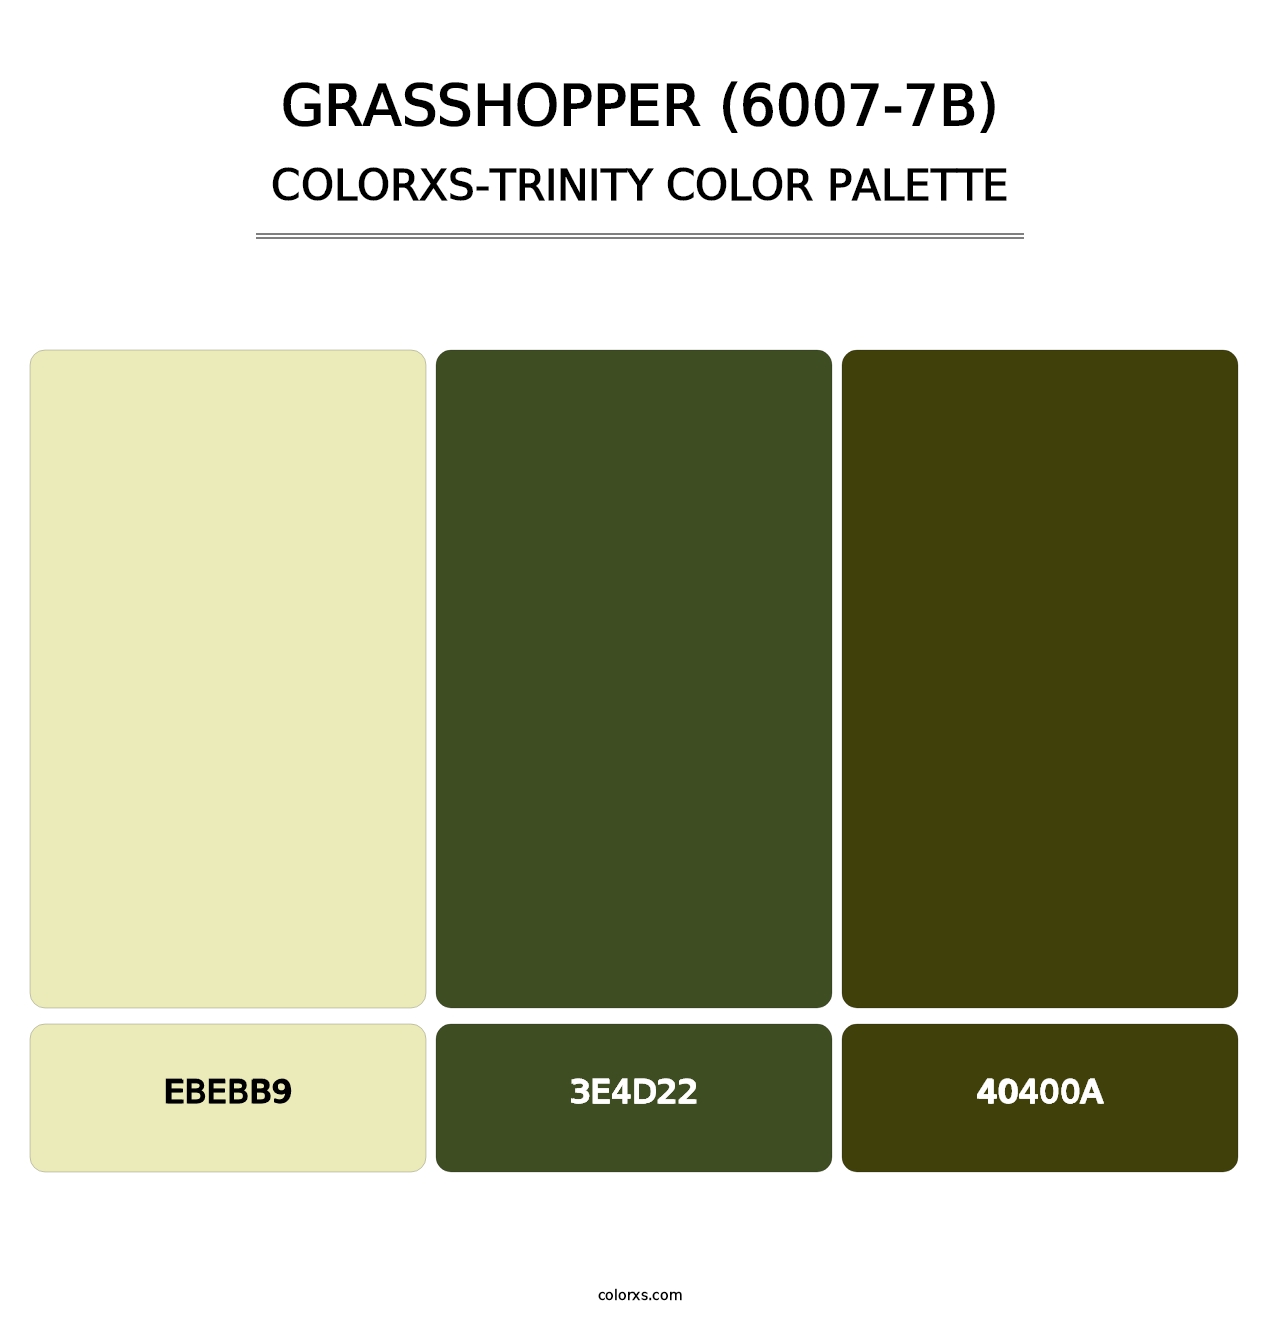 Grasshopper (6007-7B) - Colorxs Trinity Palette